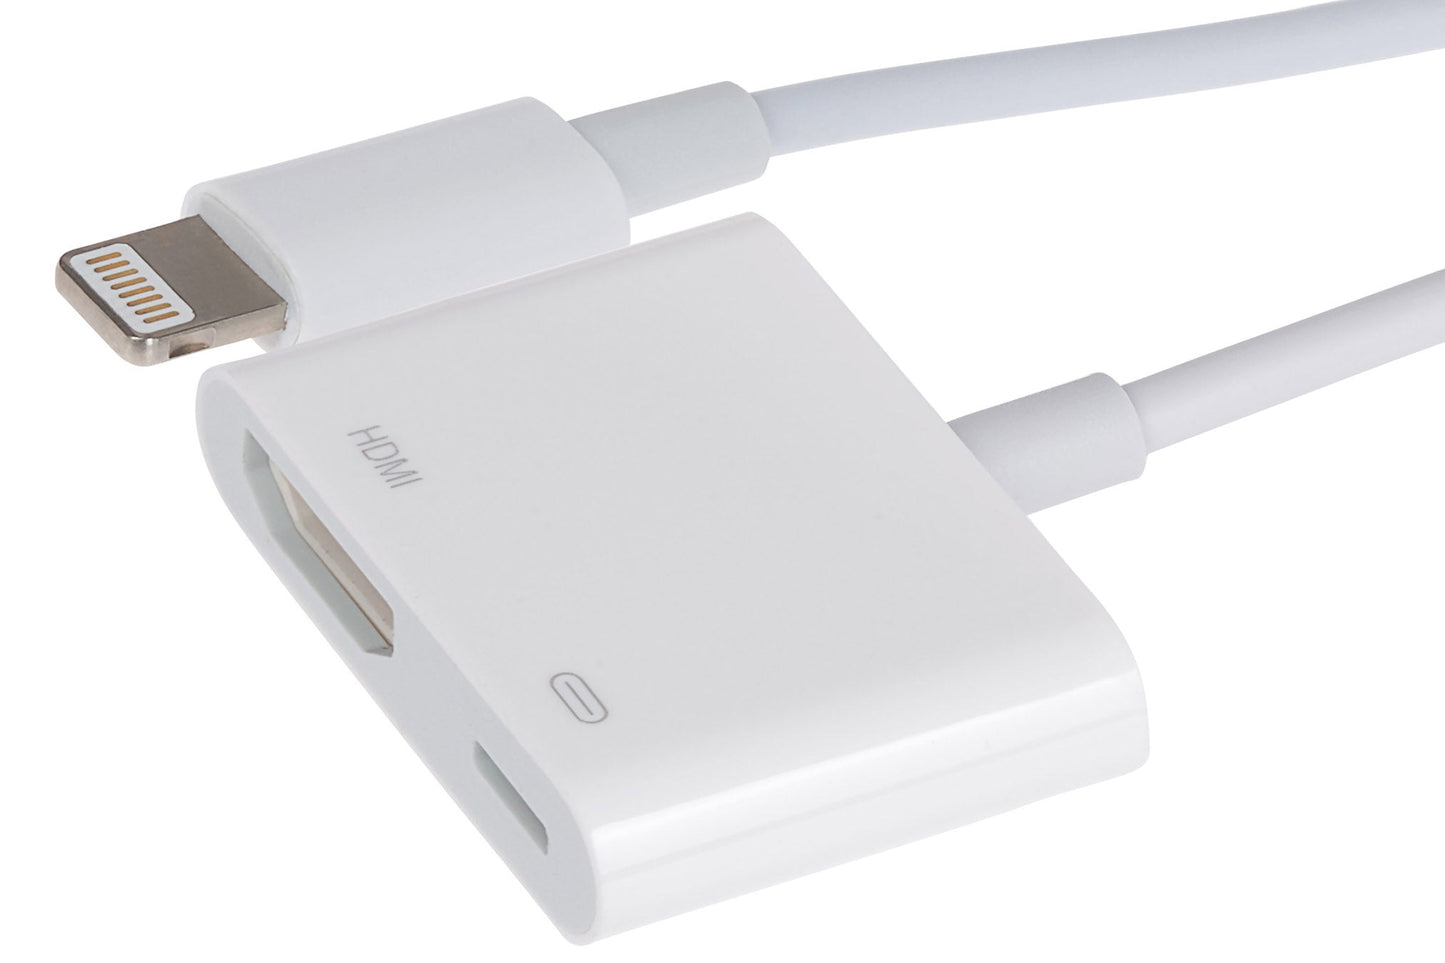 Nikkai Lightning to HDMI / Lightning Charging Port Adapter - White - maplin.co.uk